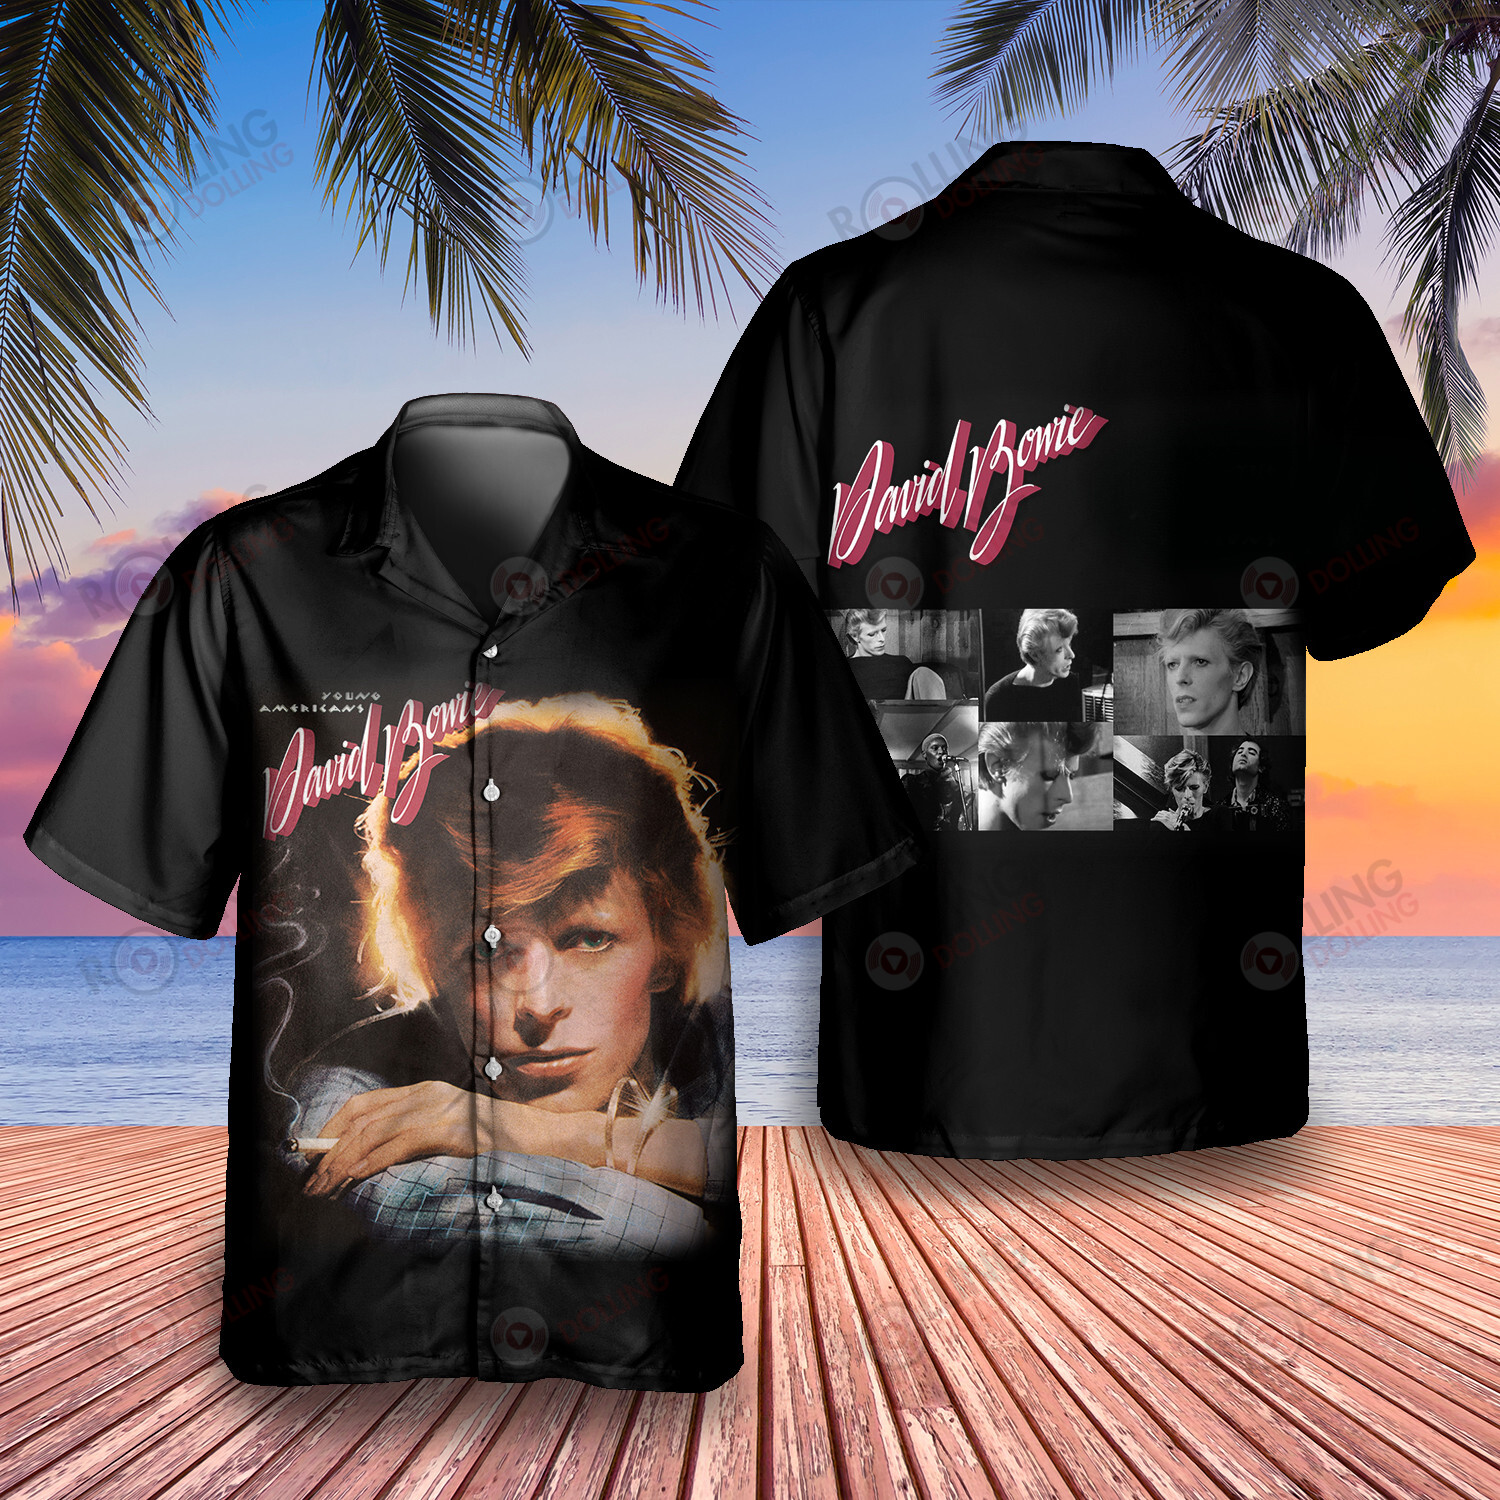 Regardless of their style, you will feel comfortable wearing Hawaiian Shirt 87